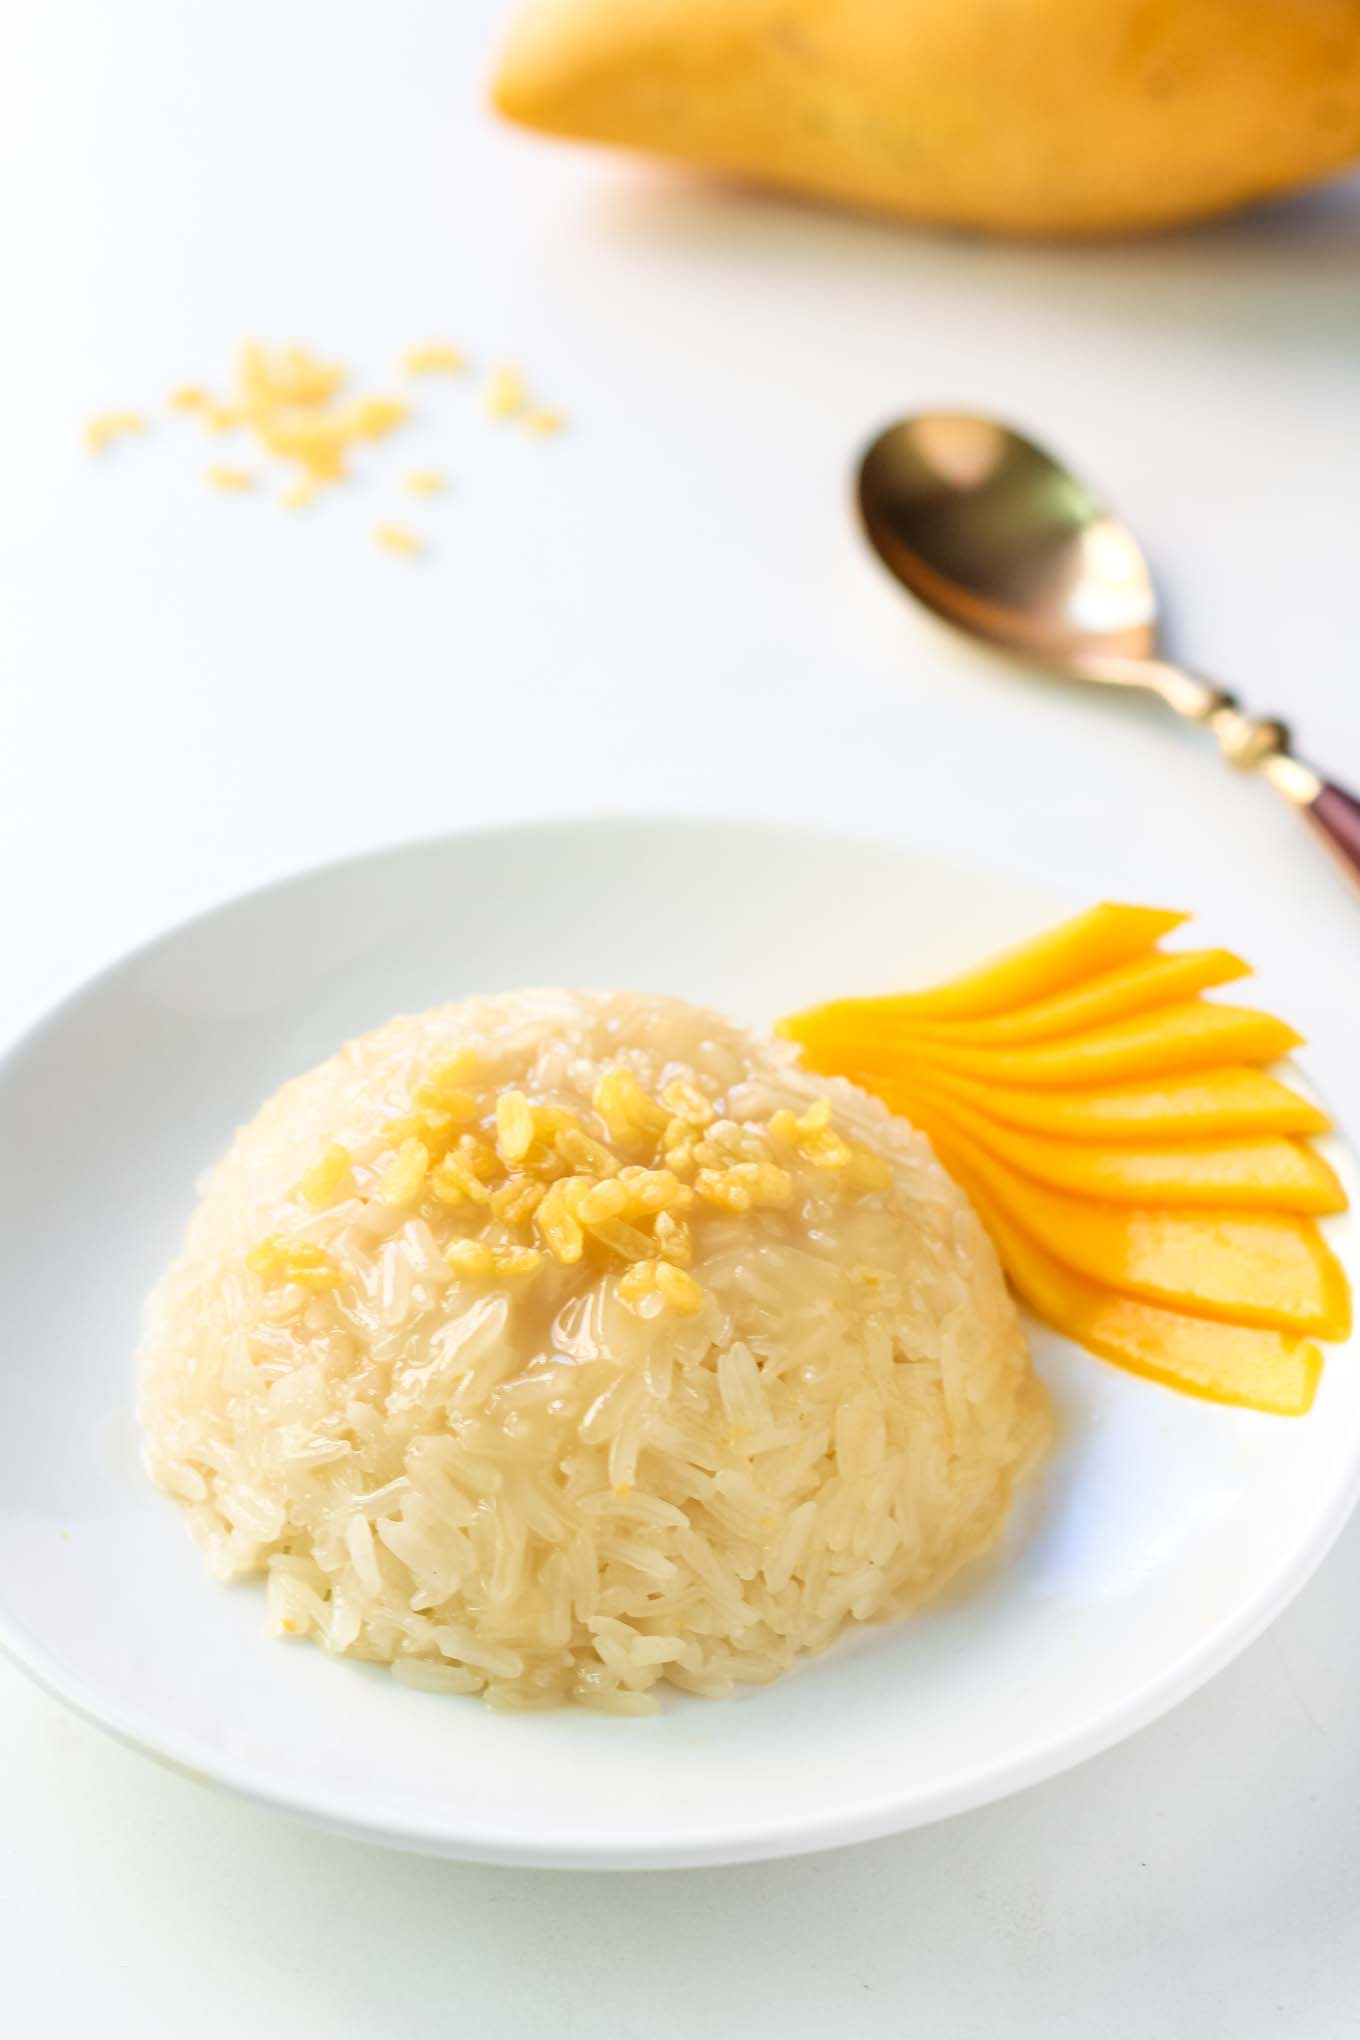 Thai Mango Sticky Rice Dessert Recipe » LeelaLicious